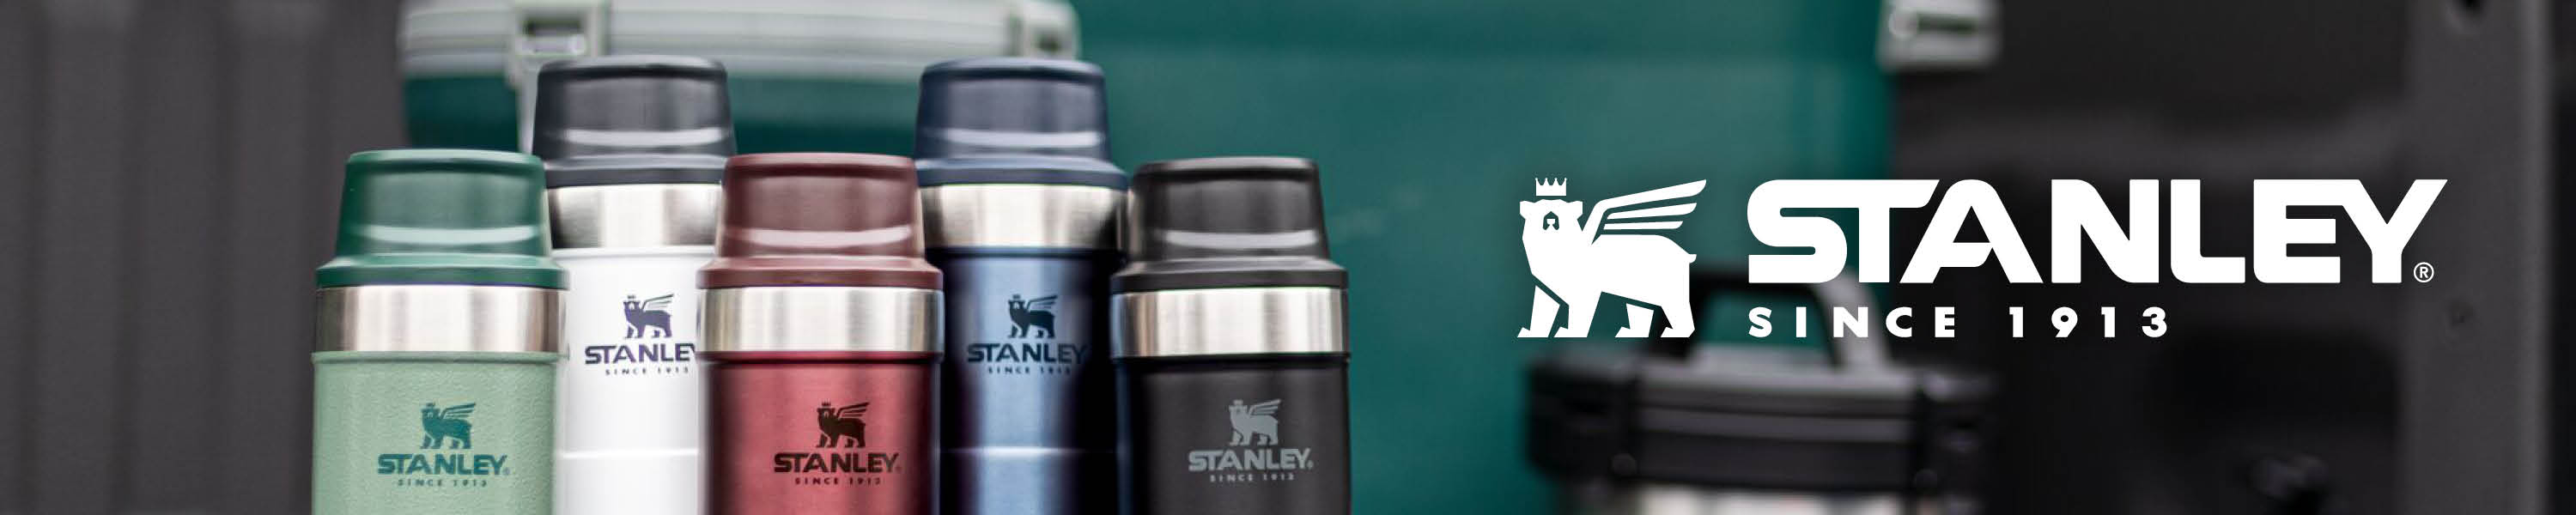 Stanley The Shortstack Travel Mug 230 ml, matt black, thermos